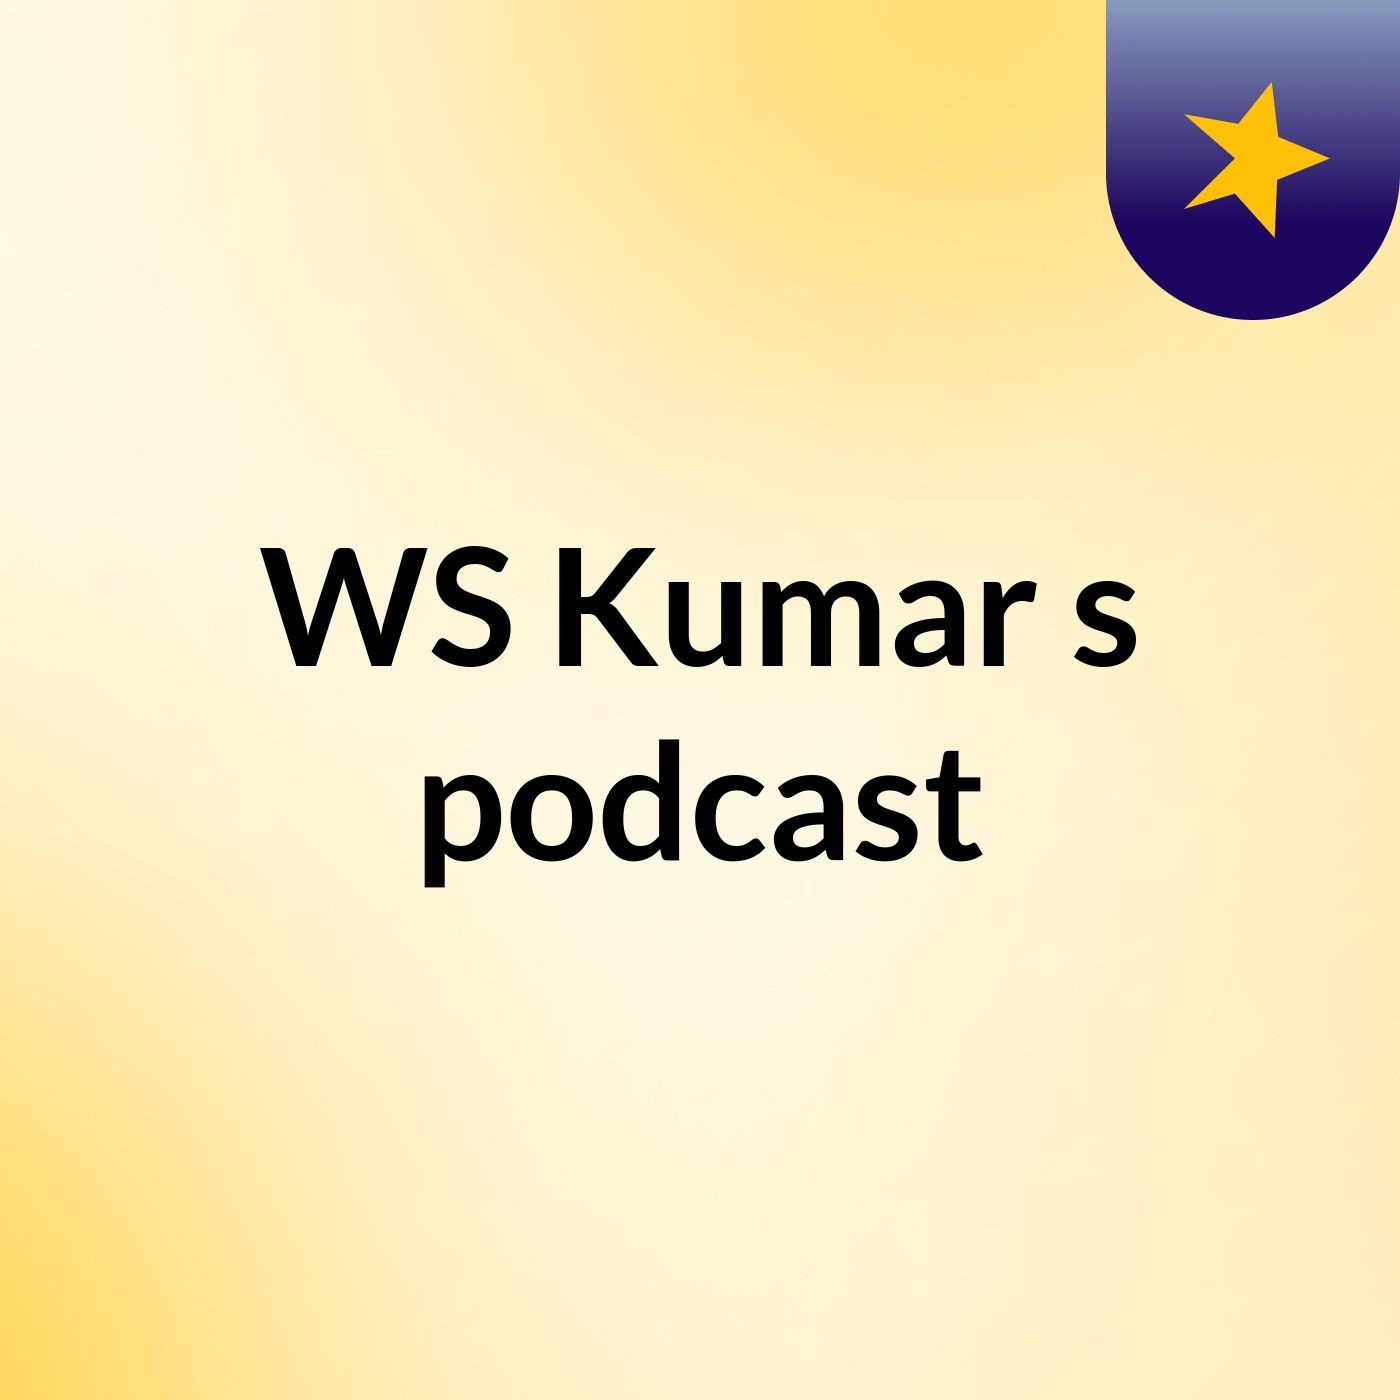 WS Kumar's podcast